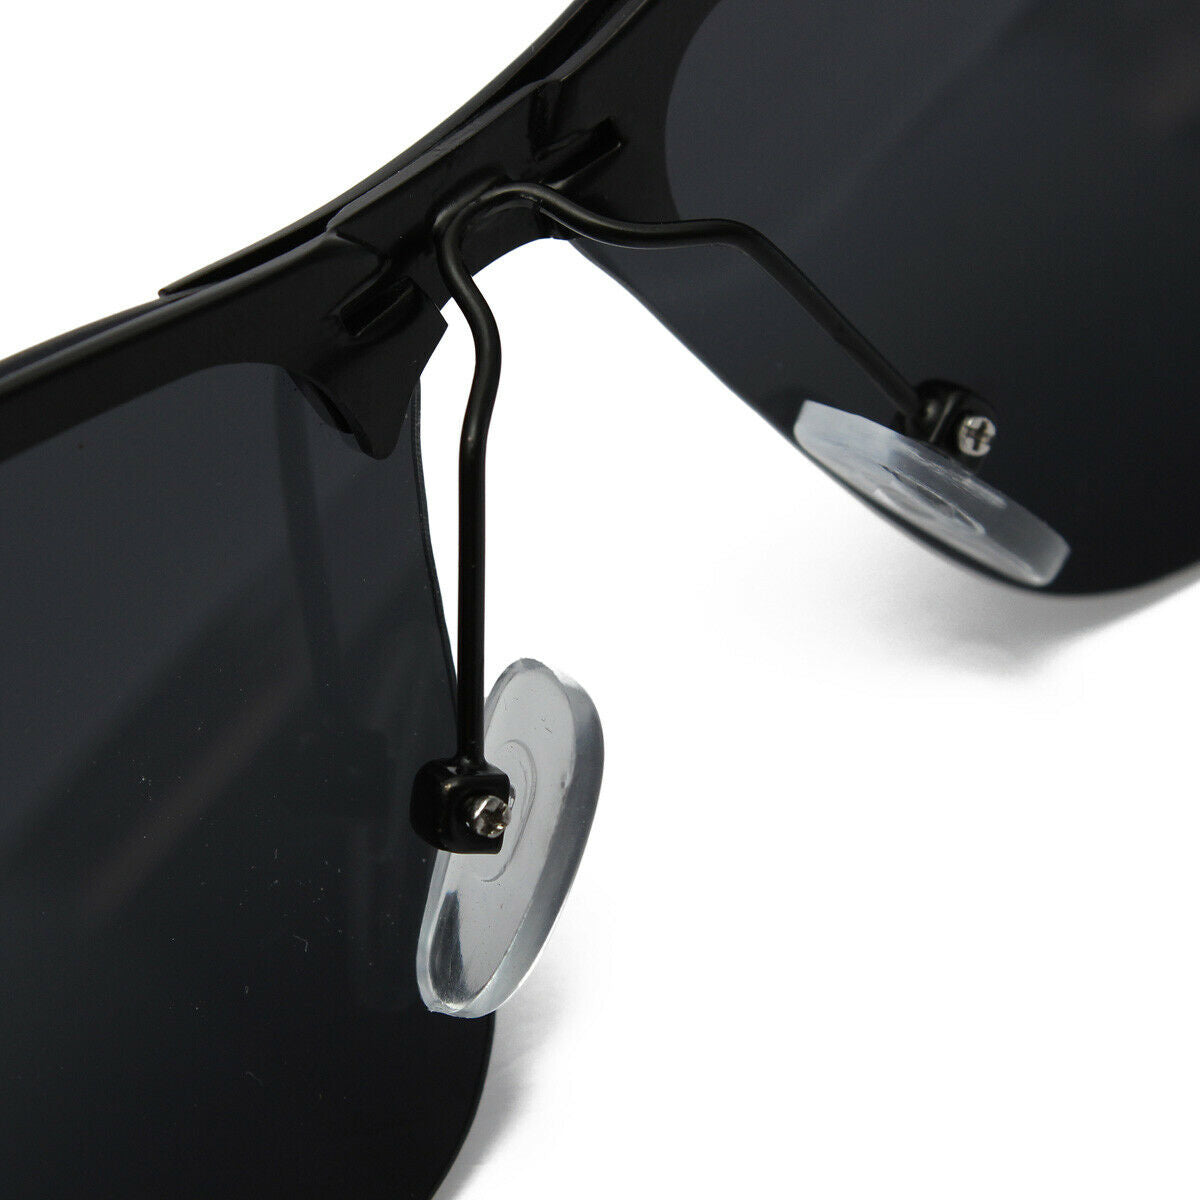 UV400 Outdoor Polarized Sunglasses Driving Eyewear Glasses Unisex Drivers Black